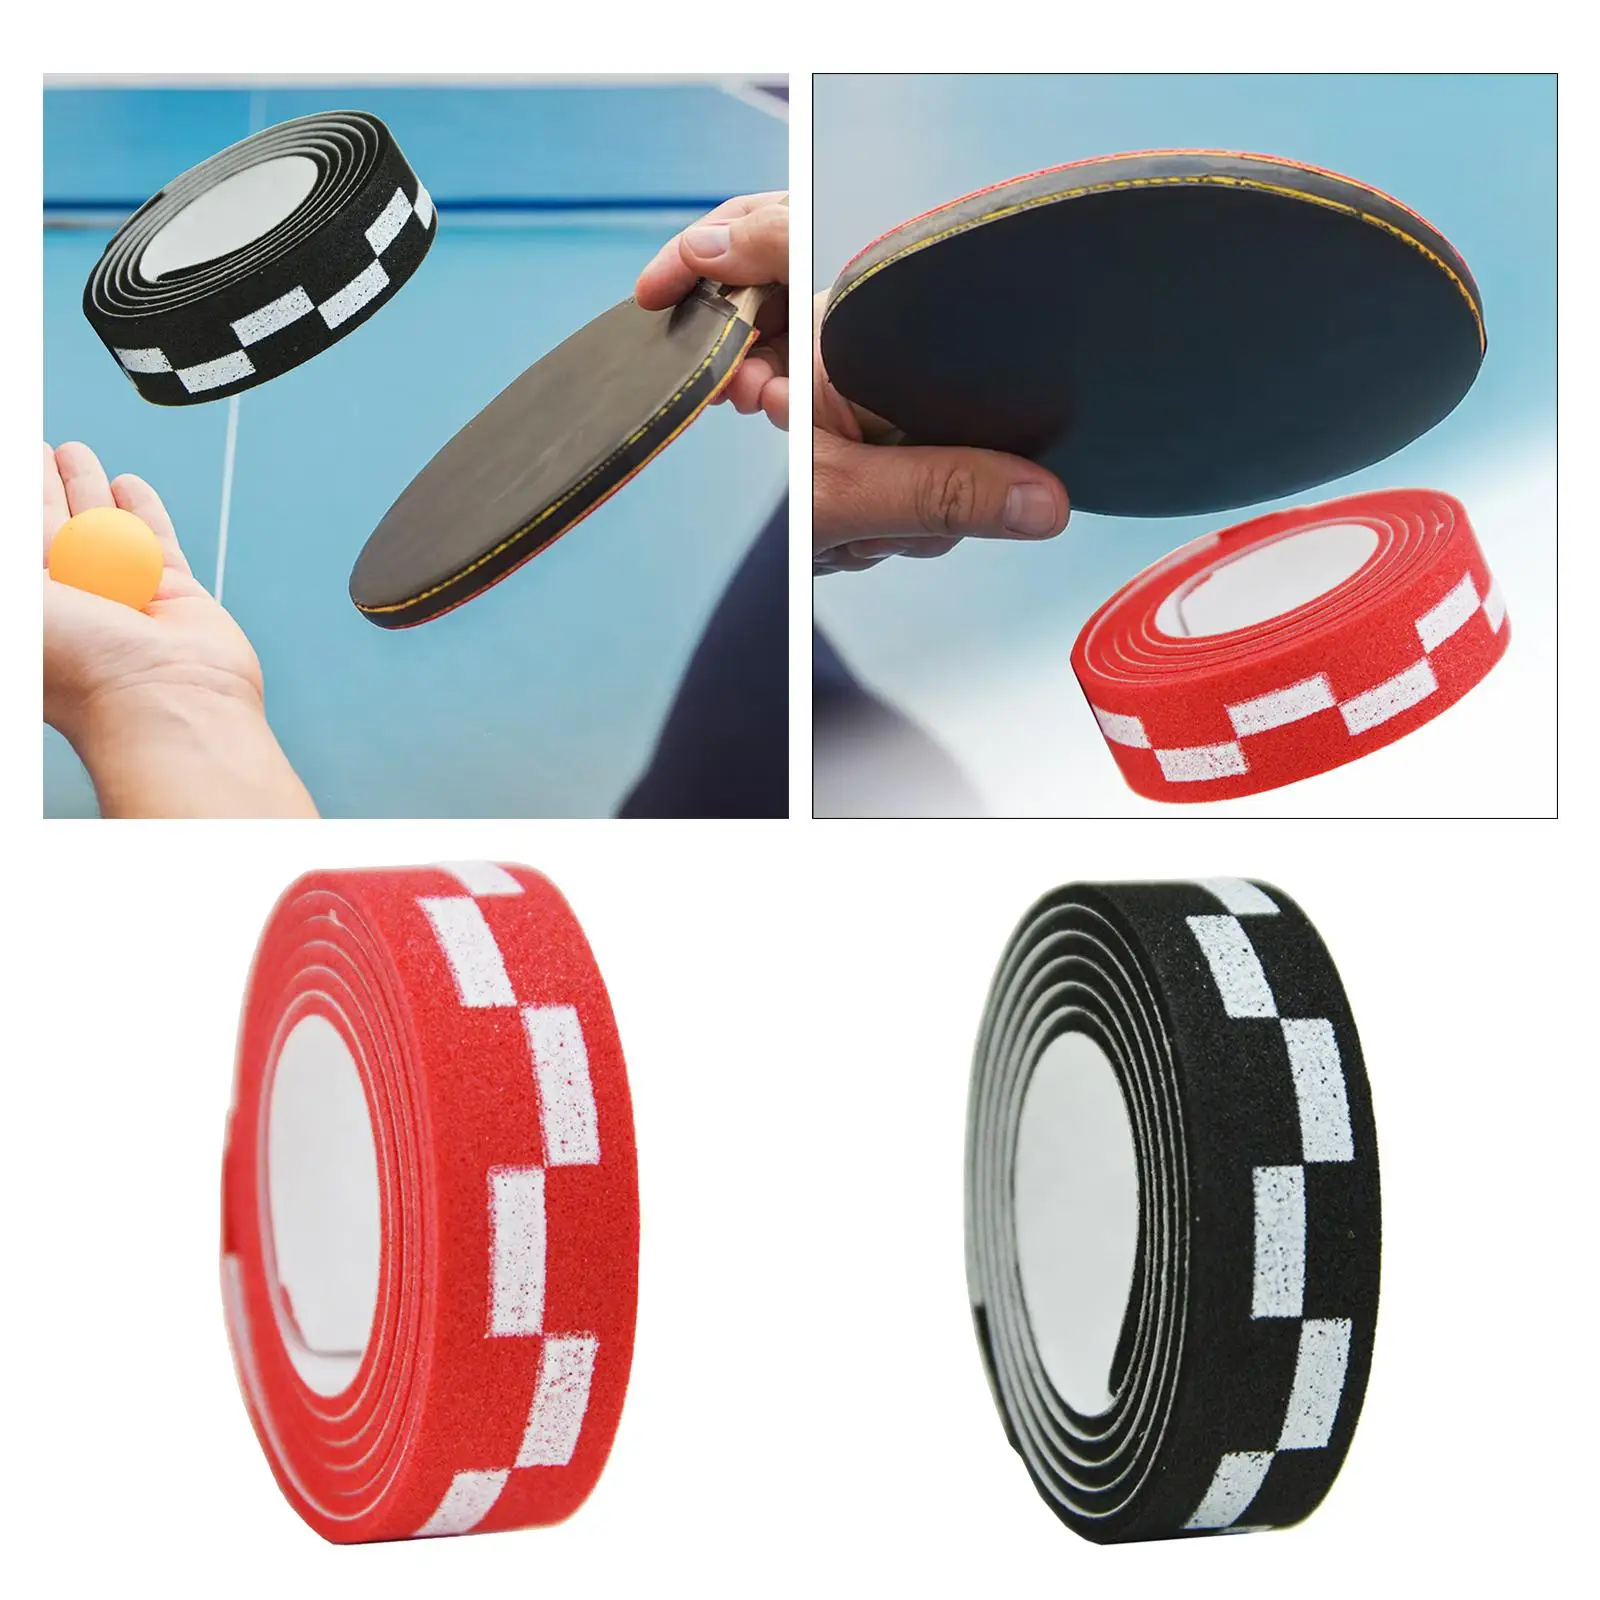 Tennis racket edge tape, tennis racket edge protector, edge protector strip in